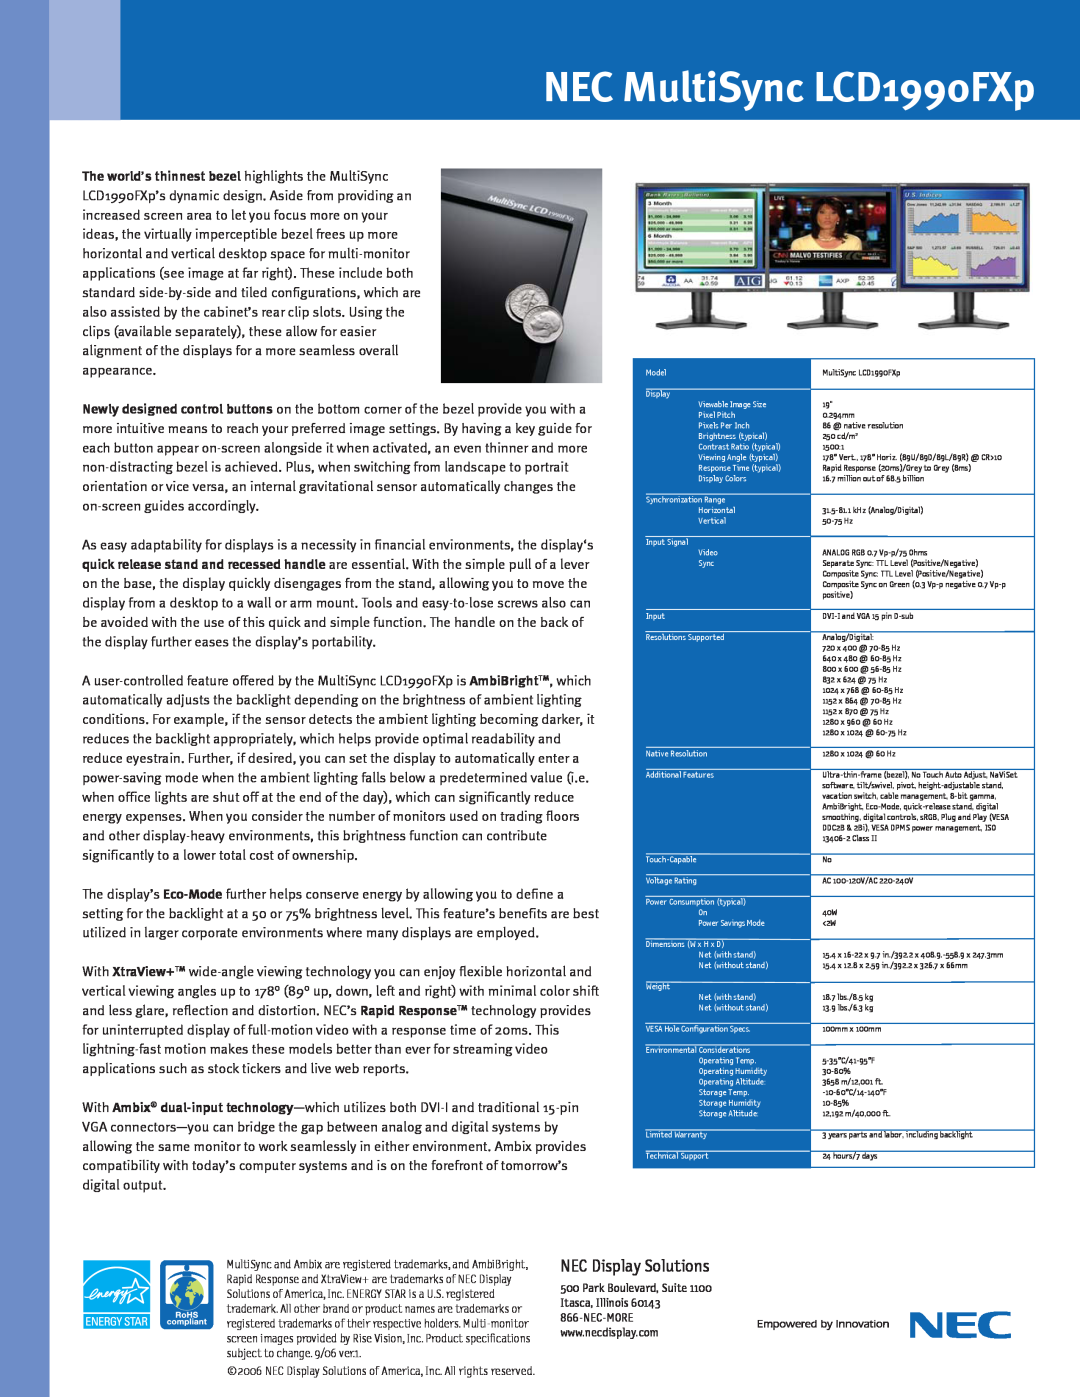 NEC manual NEC MultiSync LCD1990FXp, NEC Display Solutions 